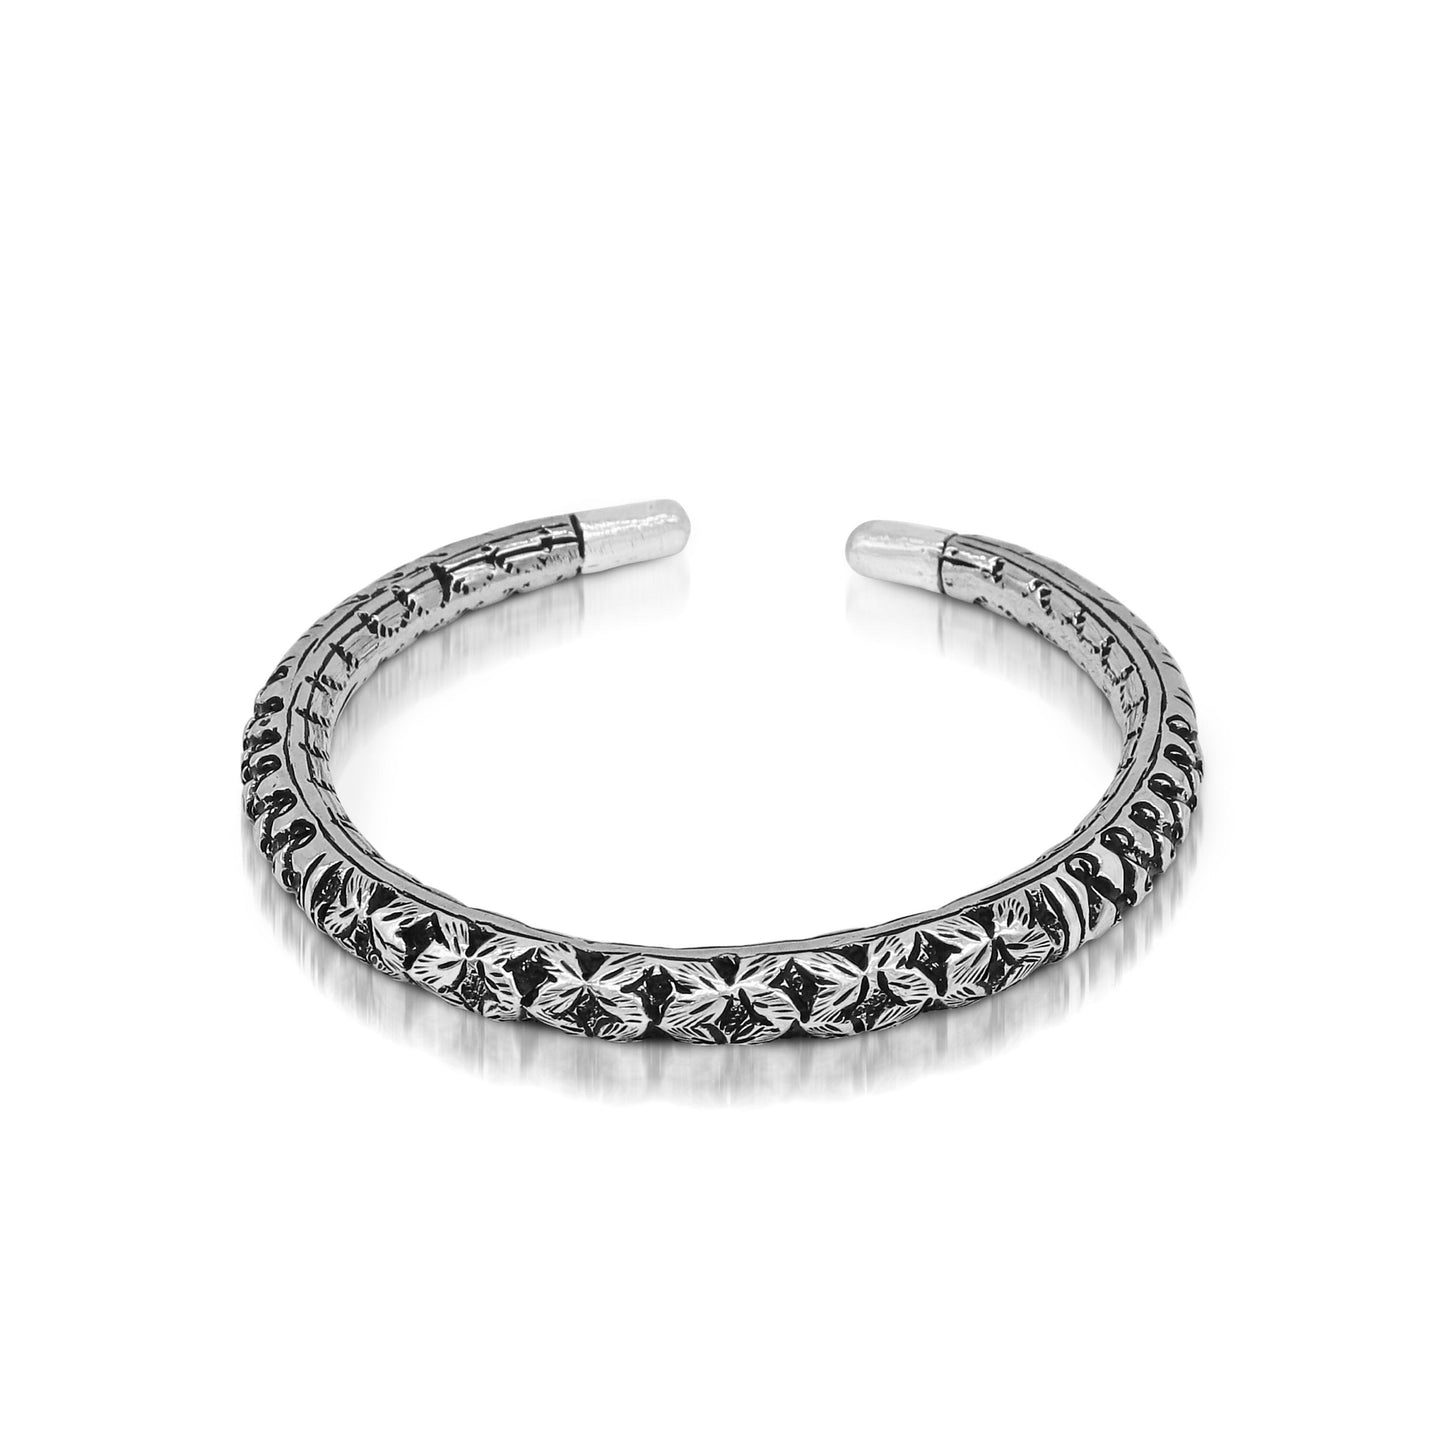 925 Sterling silver handmade chitai bangle bracelet kada tribal ethnic jewelry nsk830